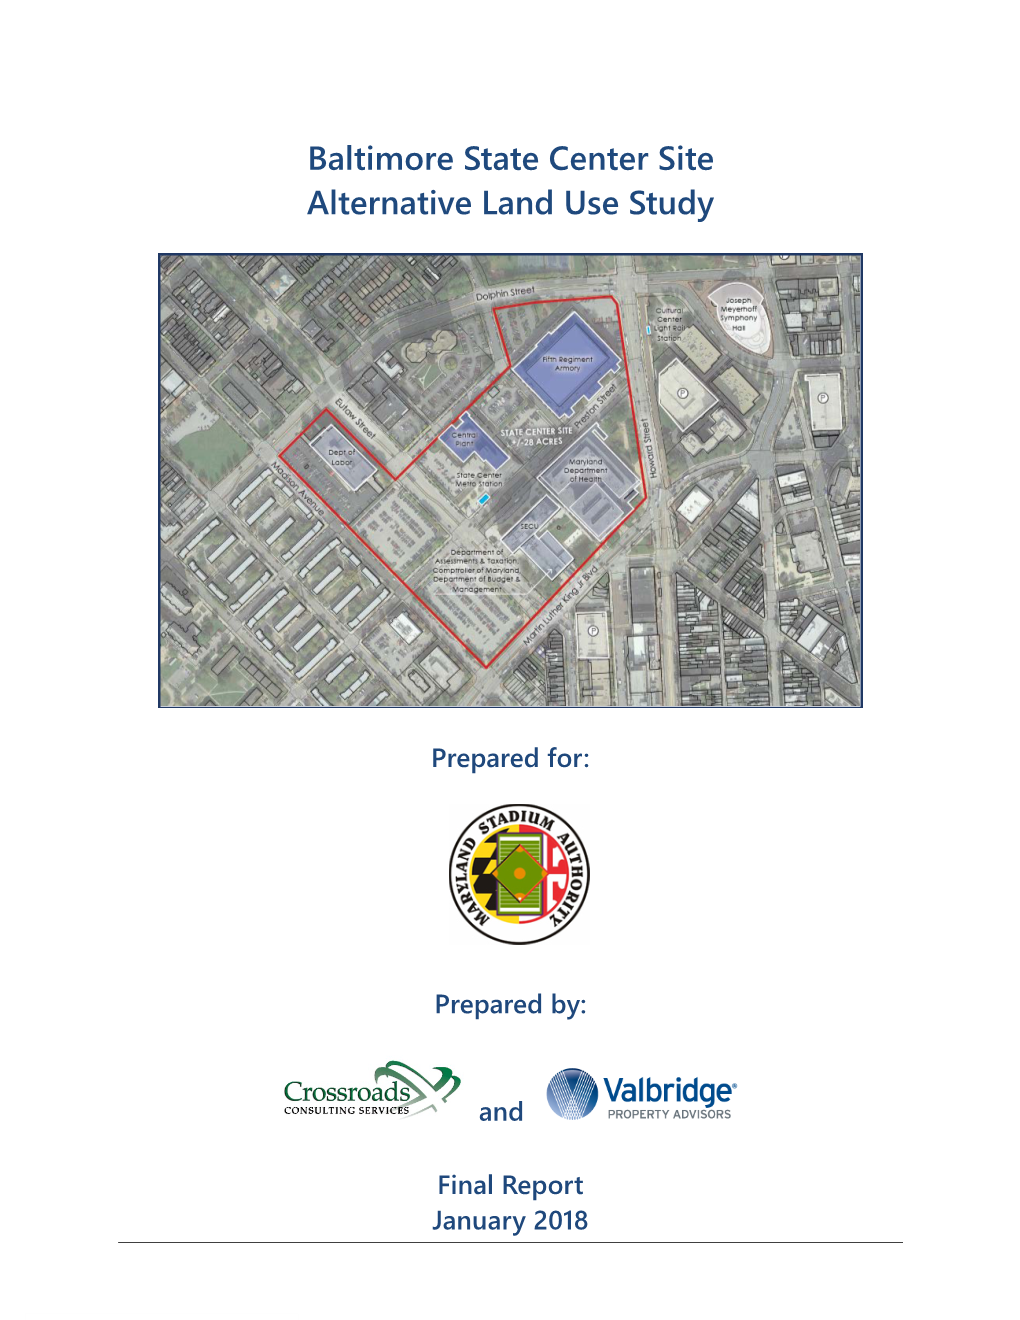 Baltimore State Center Site Alternative Land Use Study